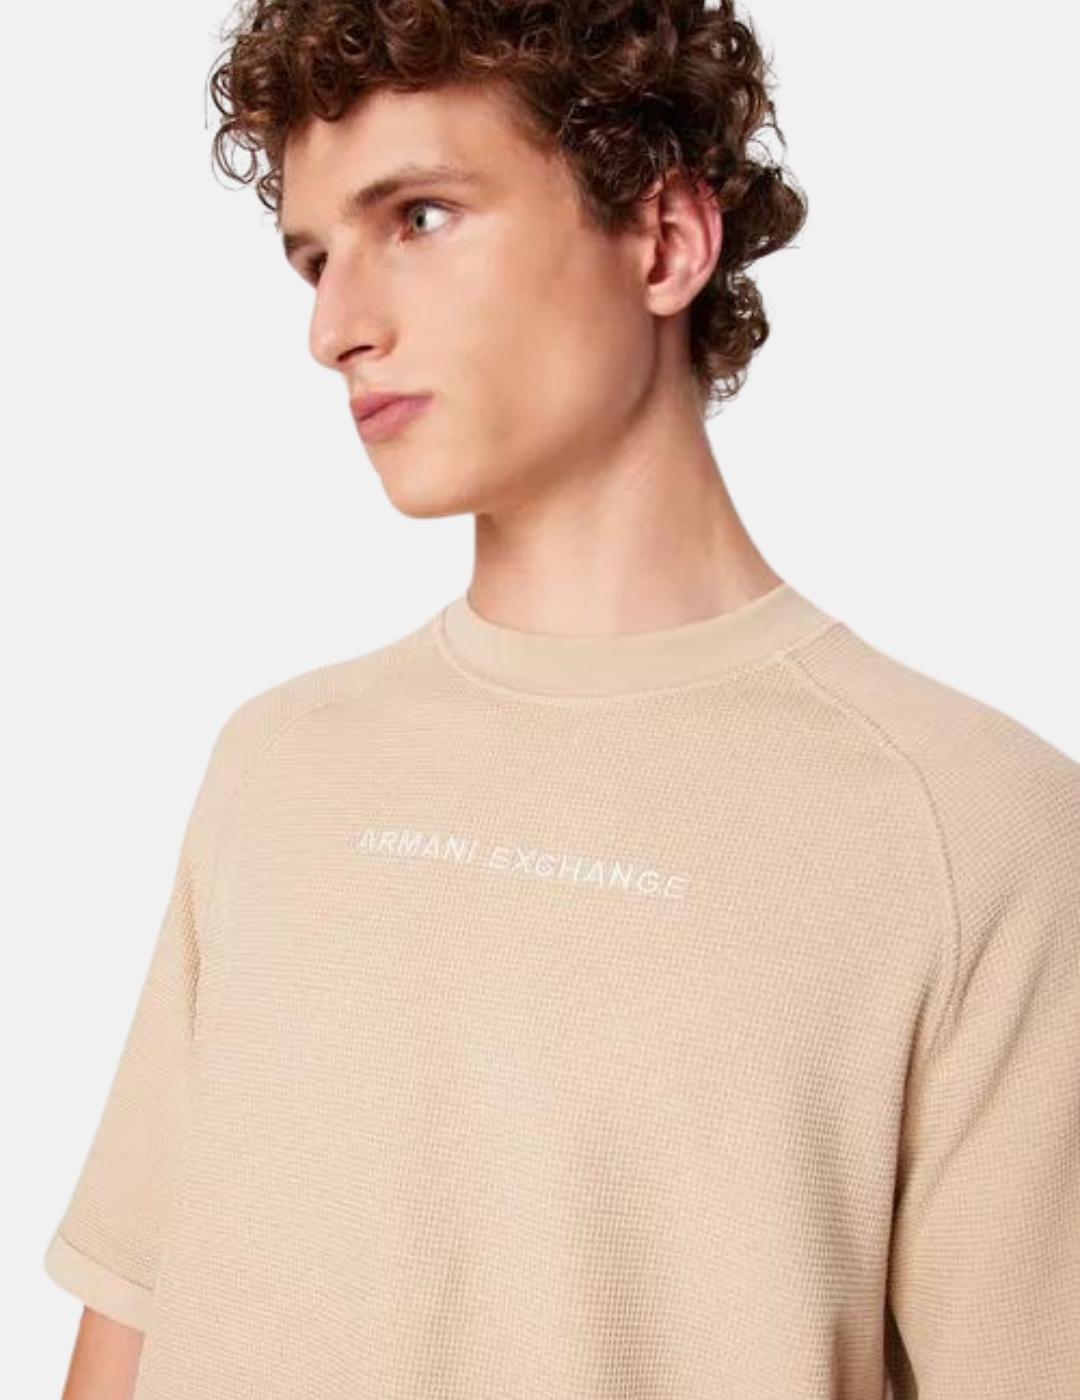 Camiseta Armani Exchange Beige logo bordado hombre